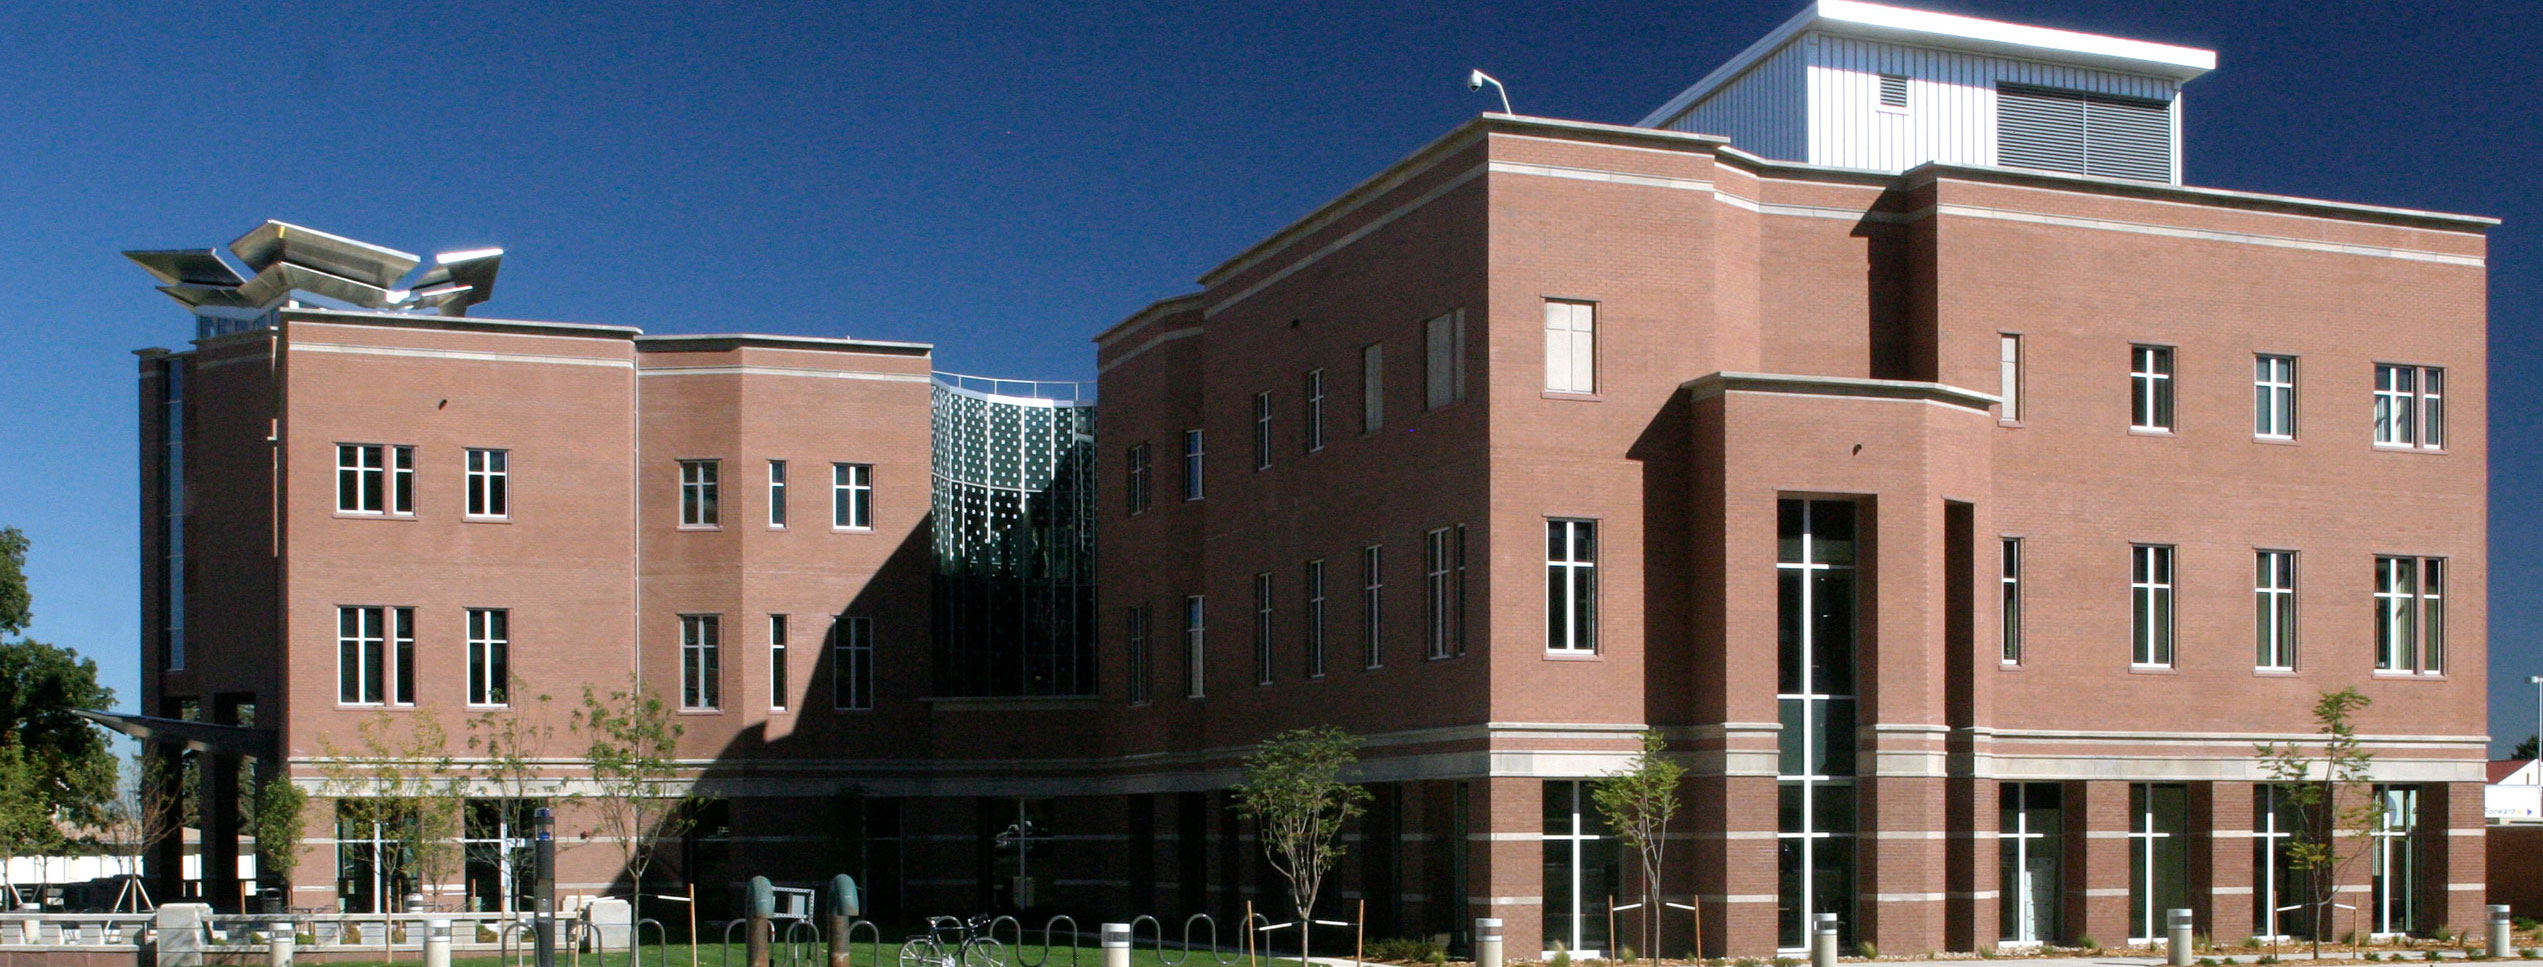 brick exterior of medical campus